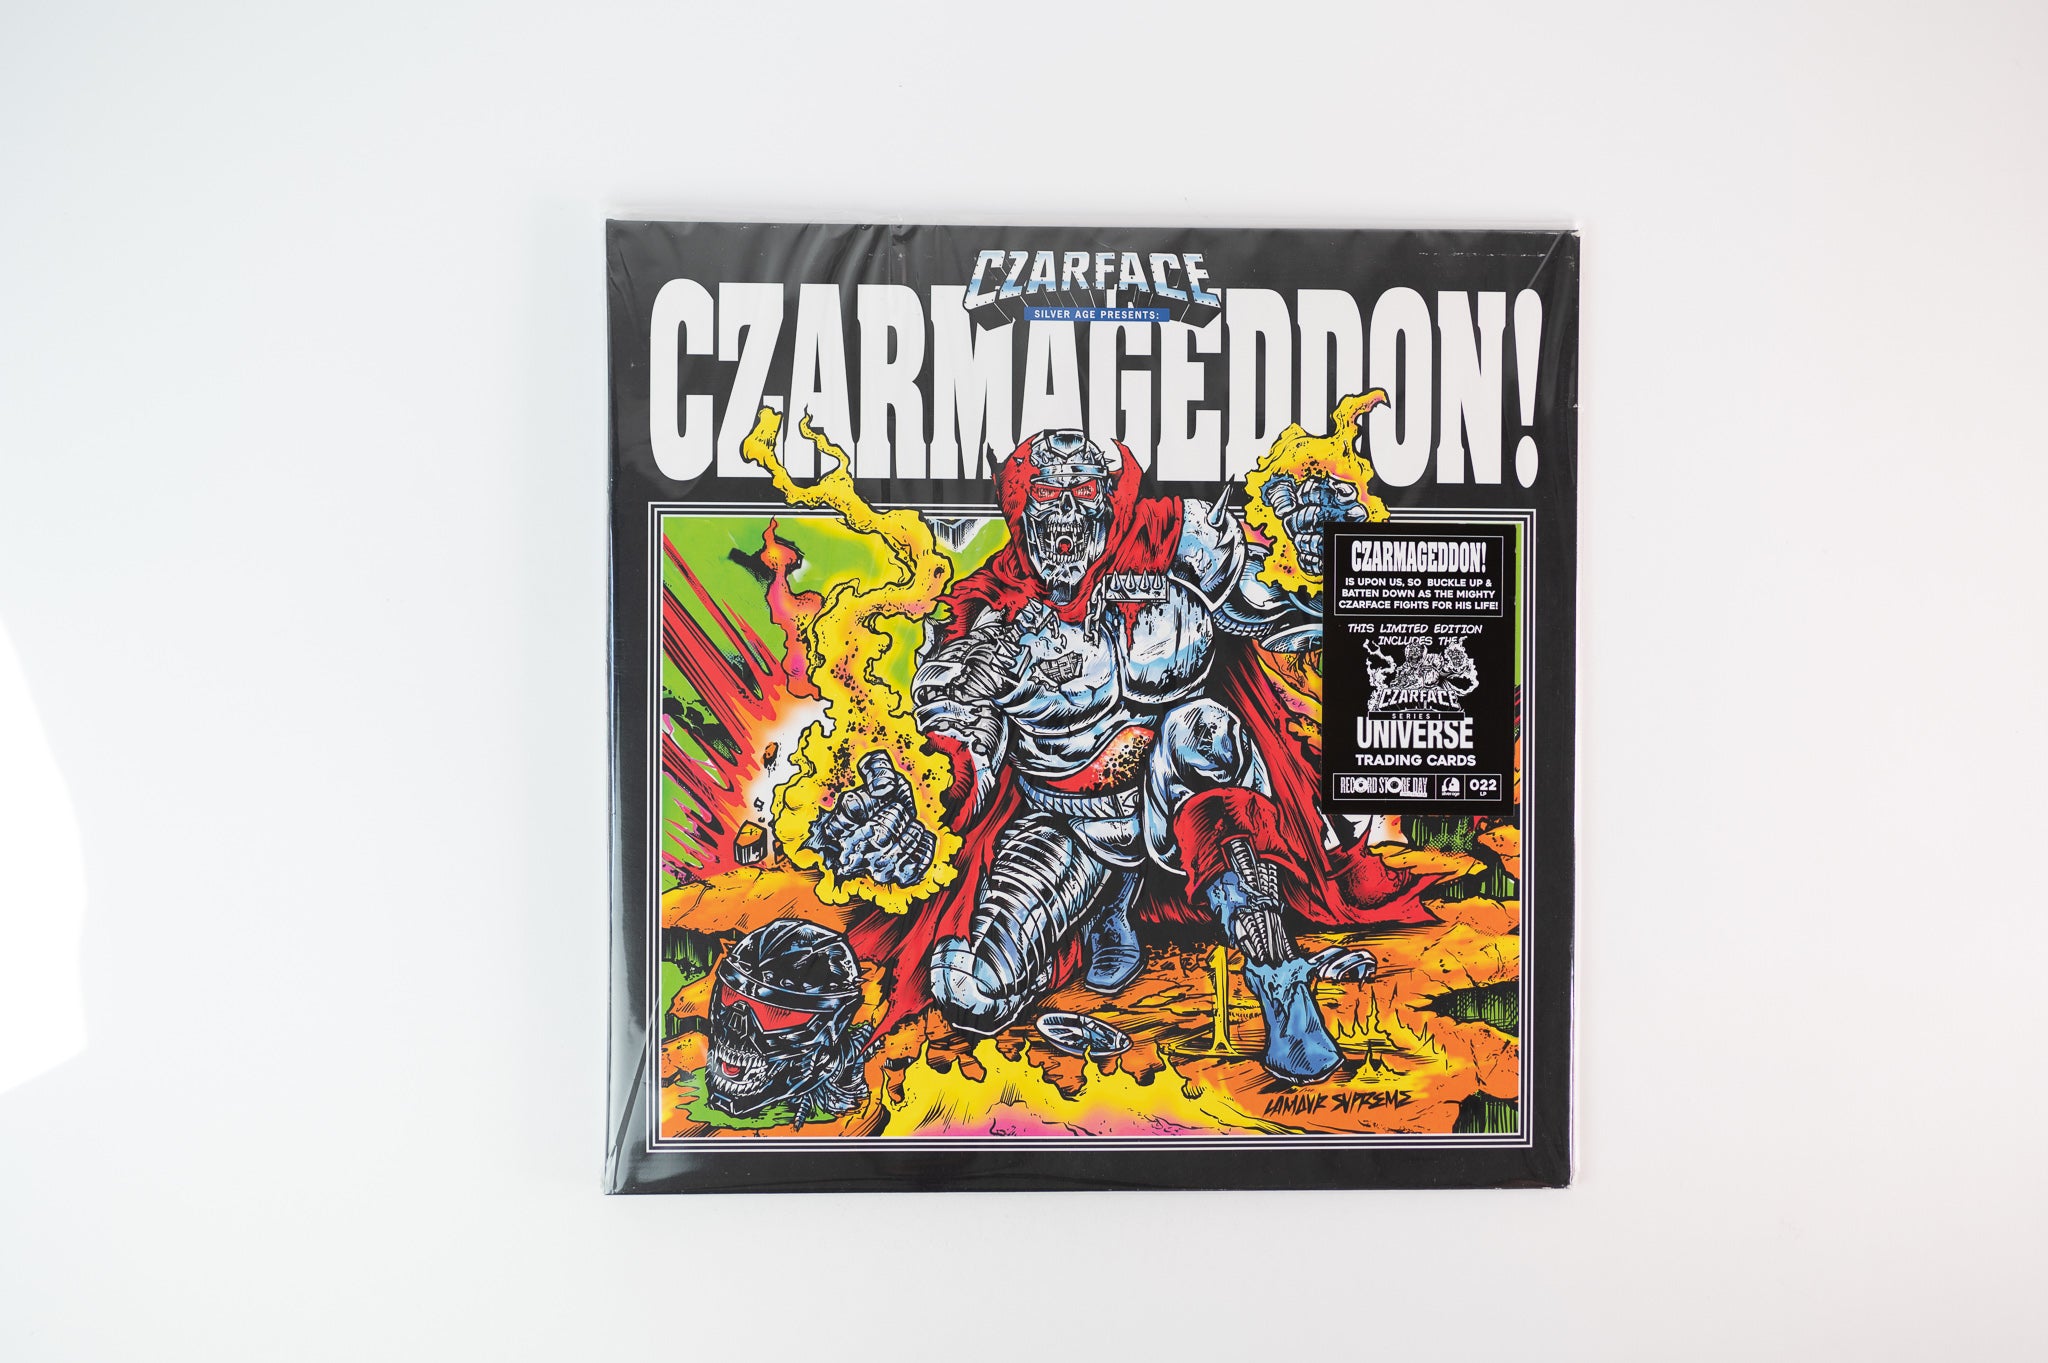 Czarface - Czarmageddon! on Silver Age RSD 2022